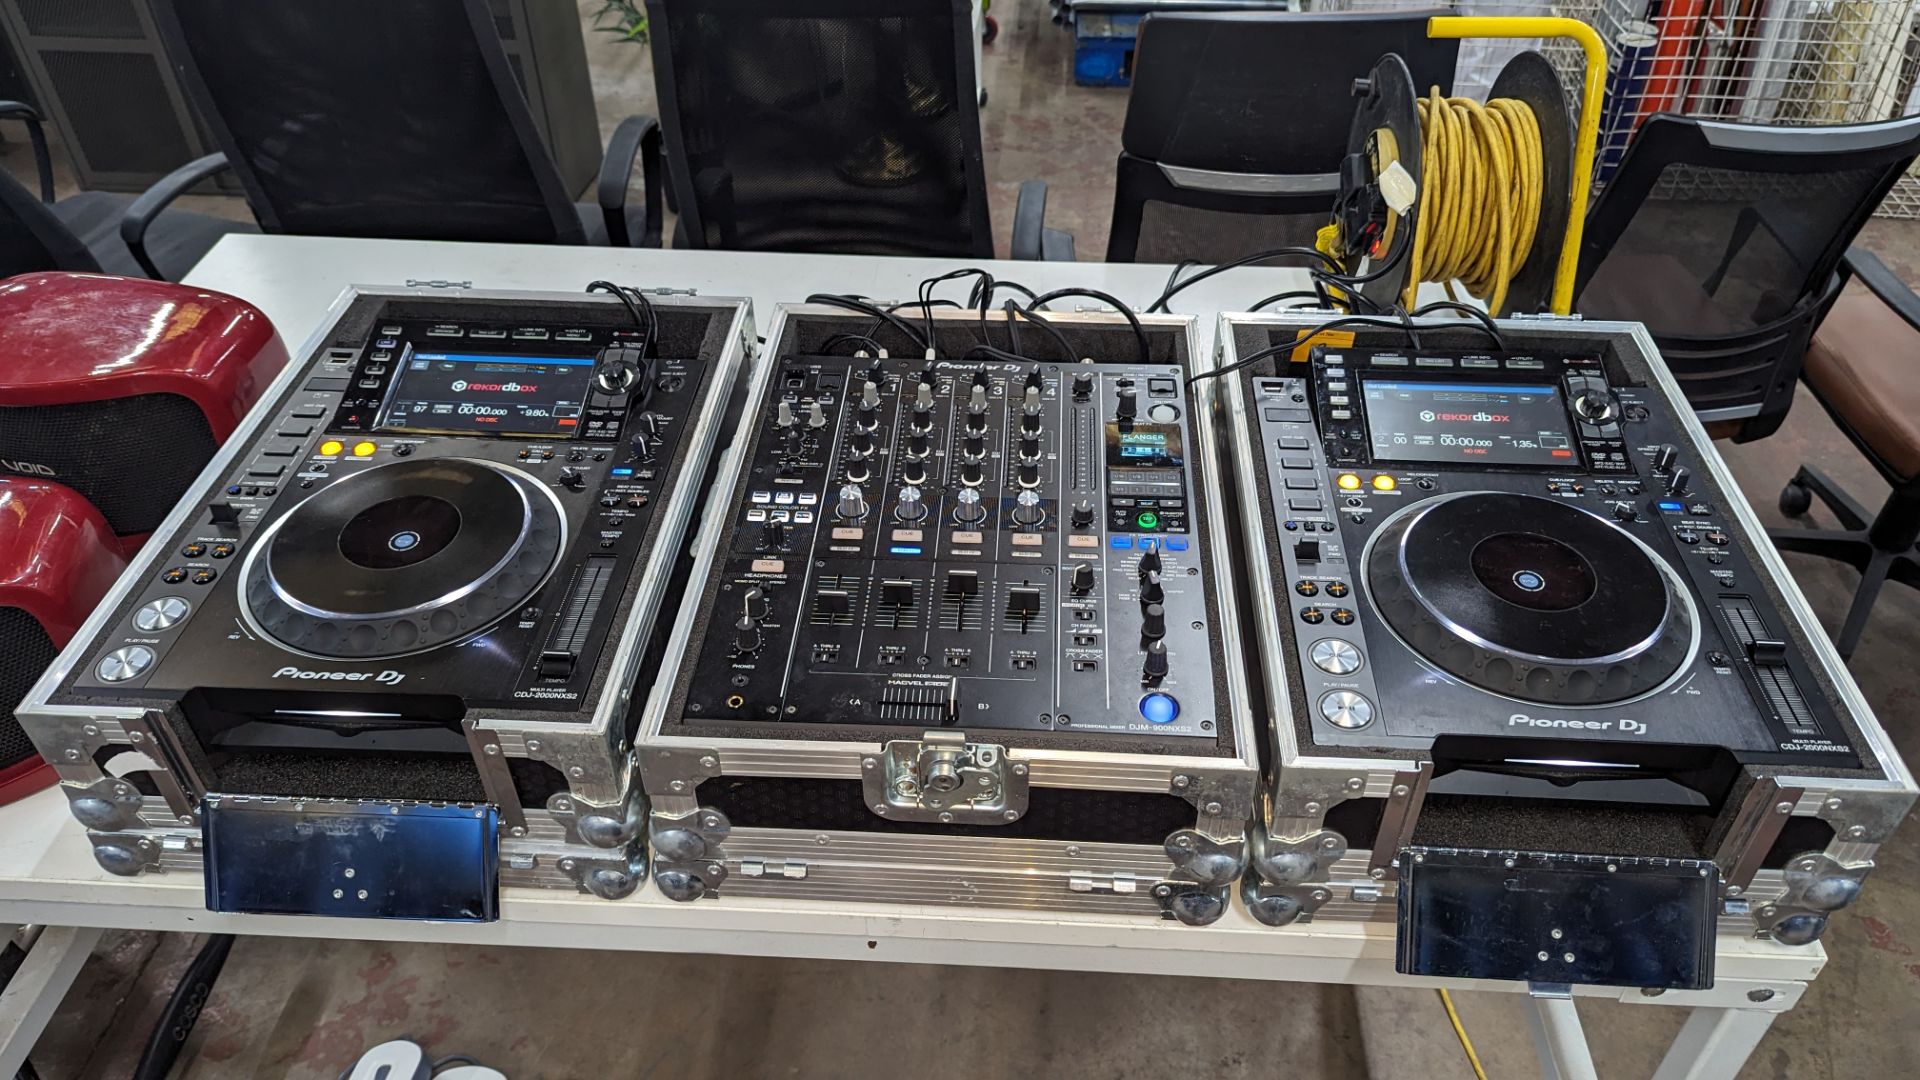 Pioneer Pro DJ package: DJM-900NXS2 Mixer & 2x DJM-900NXS2 multi players - Image 51 of 55